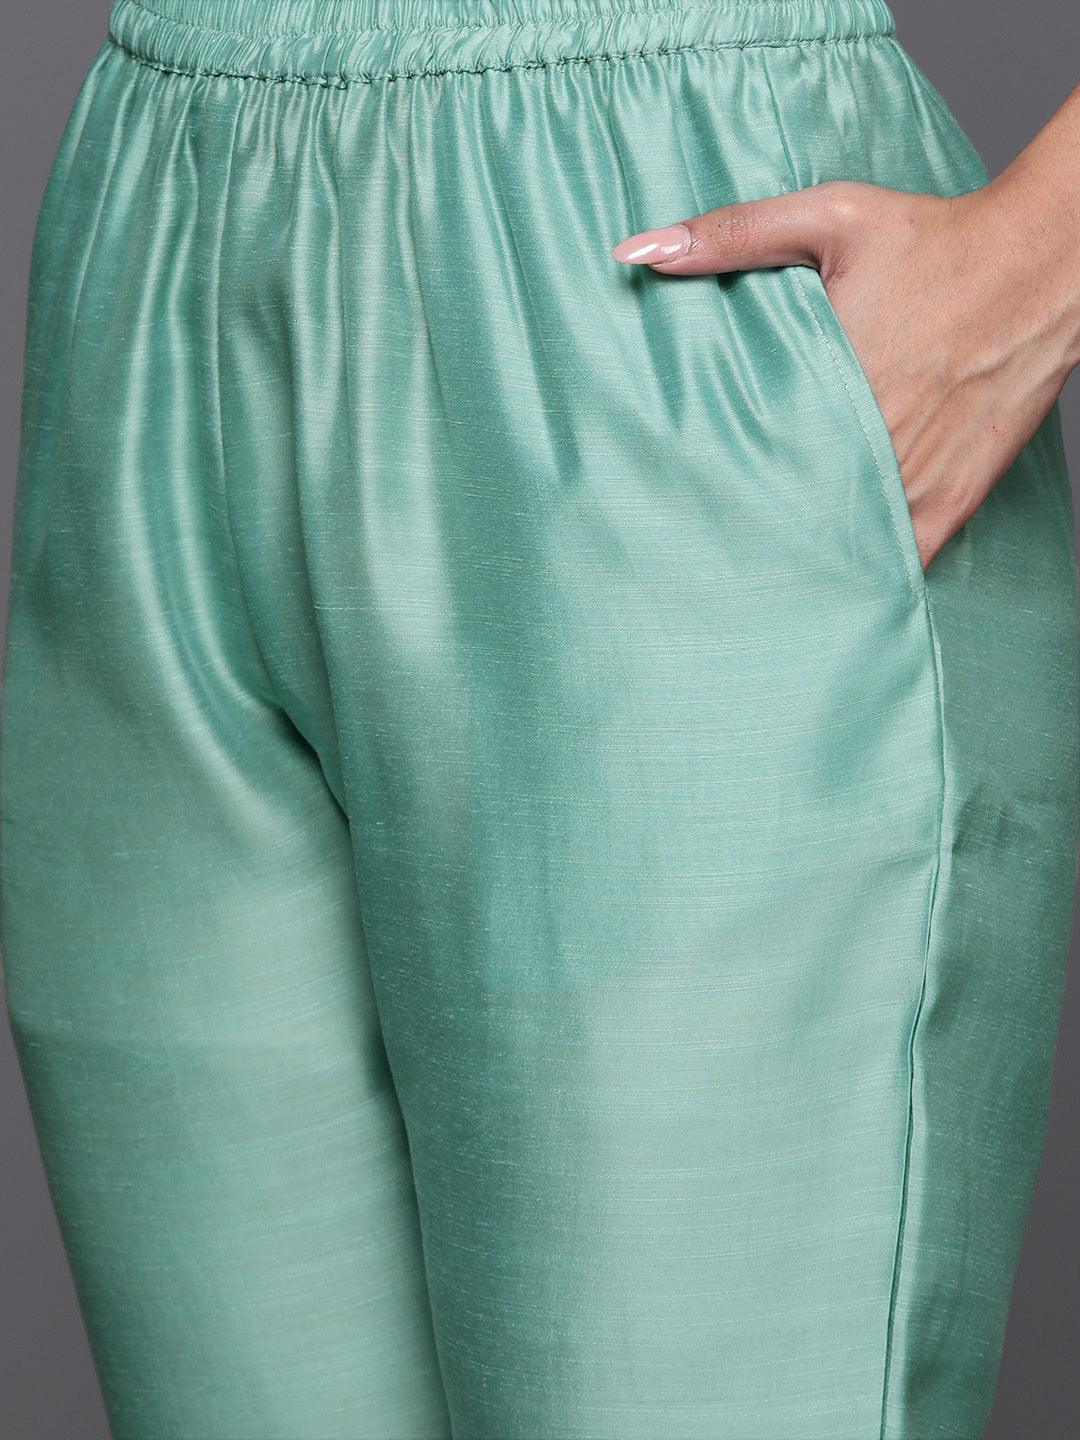 Sea Green Embroidered Chanderi Silk Straight Kurta With Trousers & Dupatta - Libas